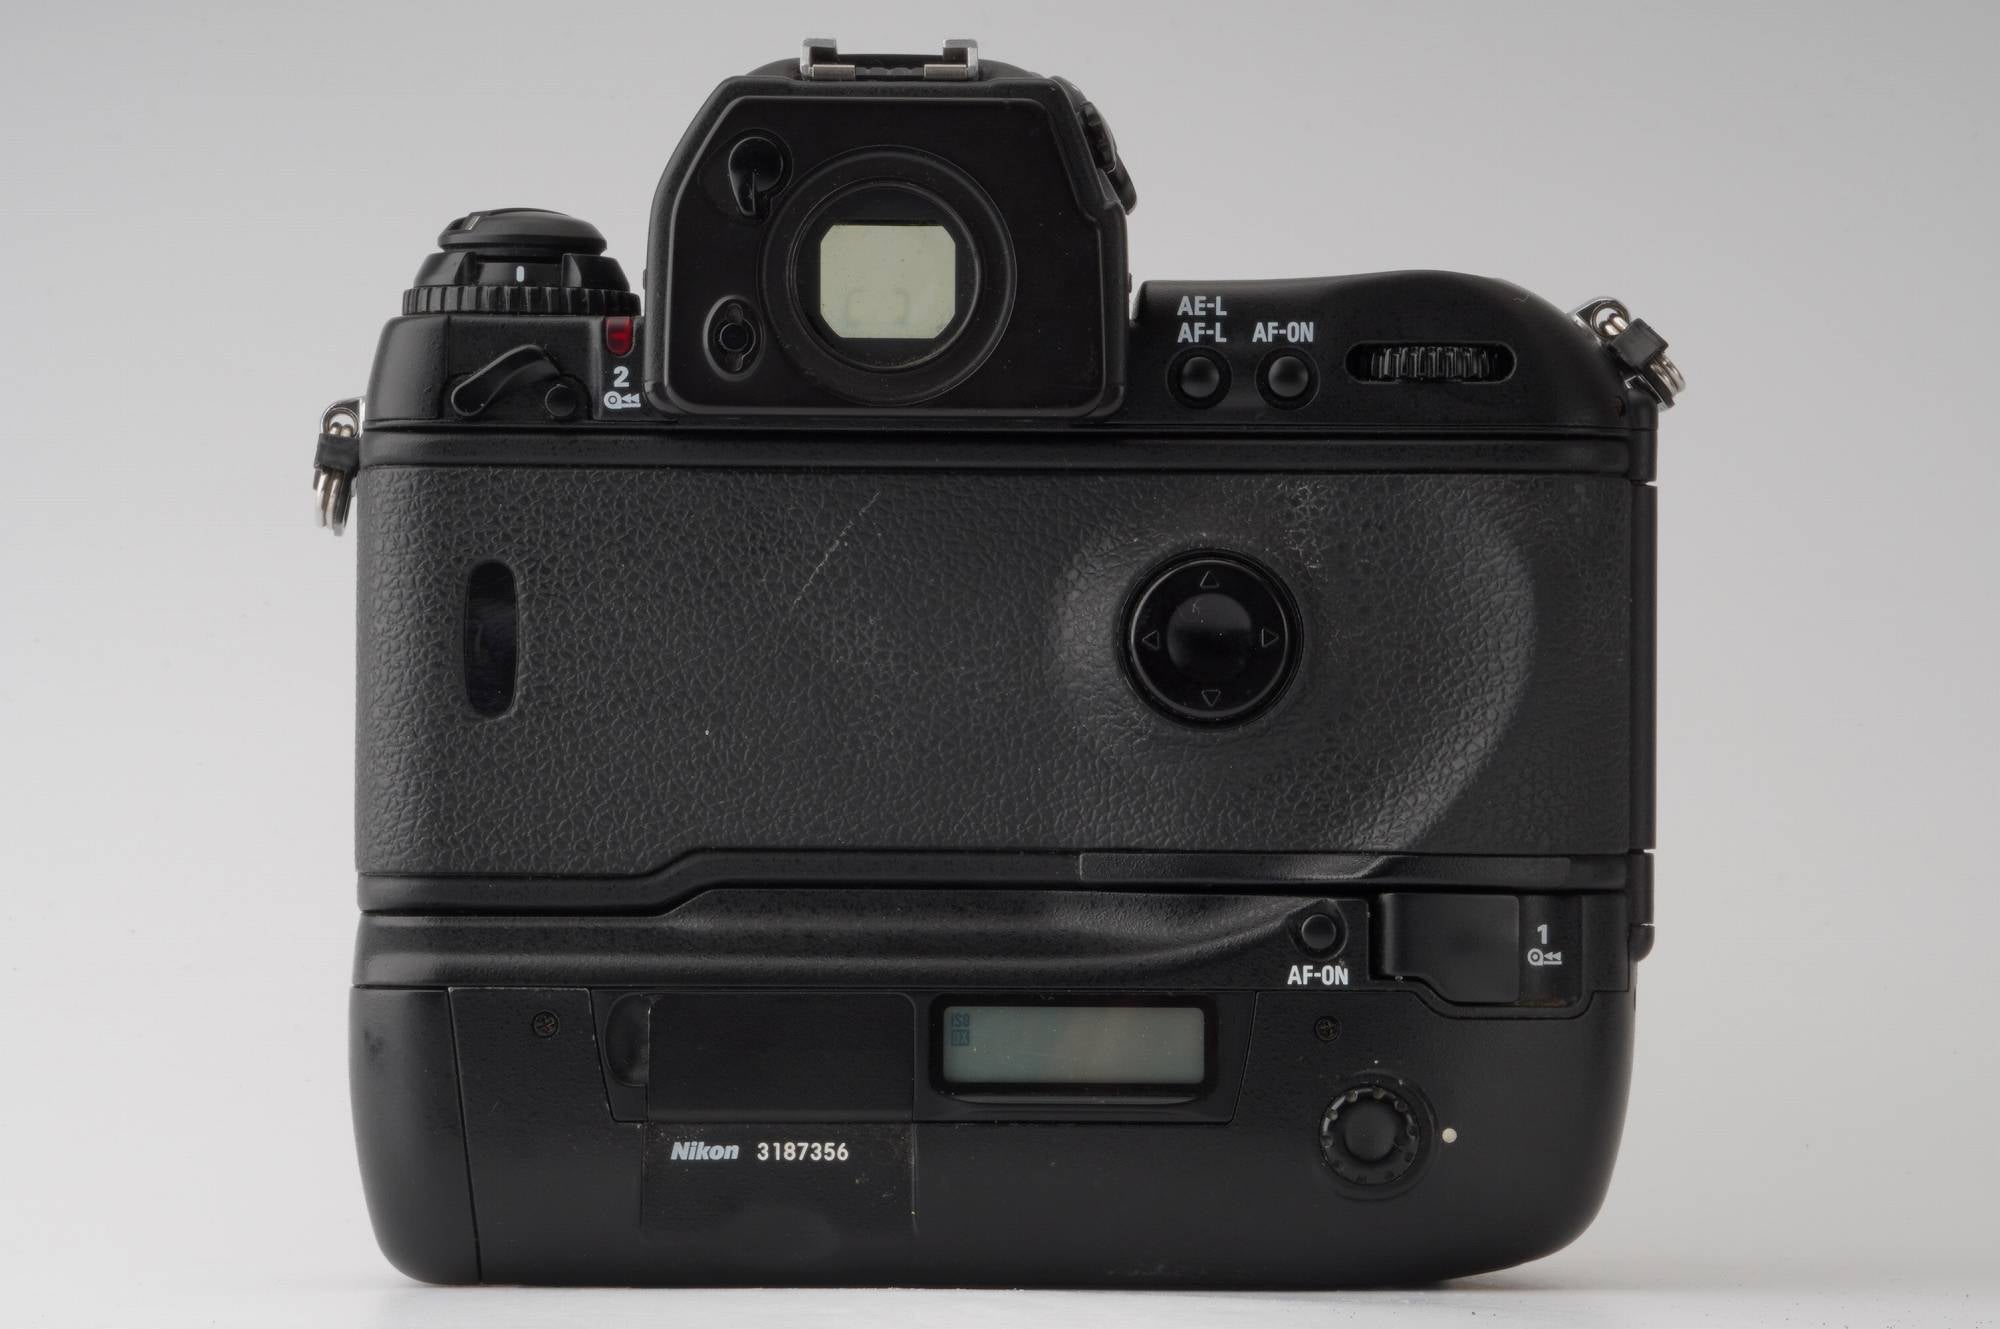 Nikon ニコン F5 35mm SLR Film Camera  Body